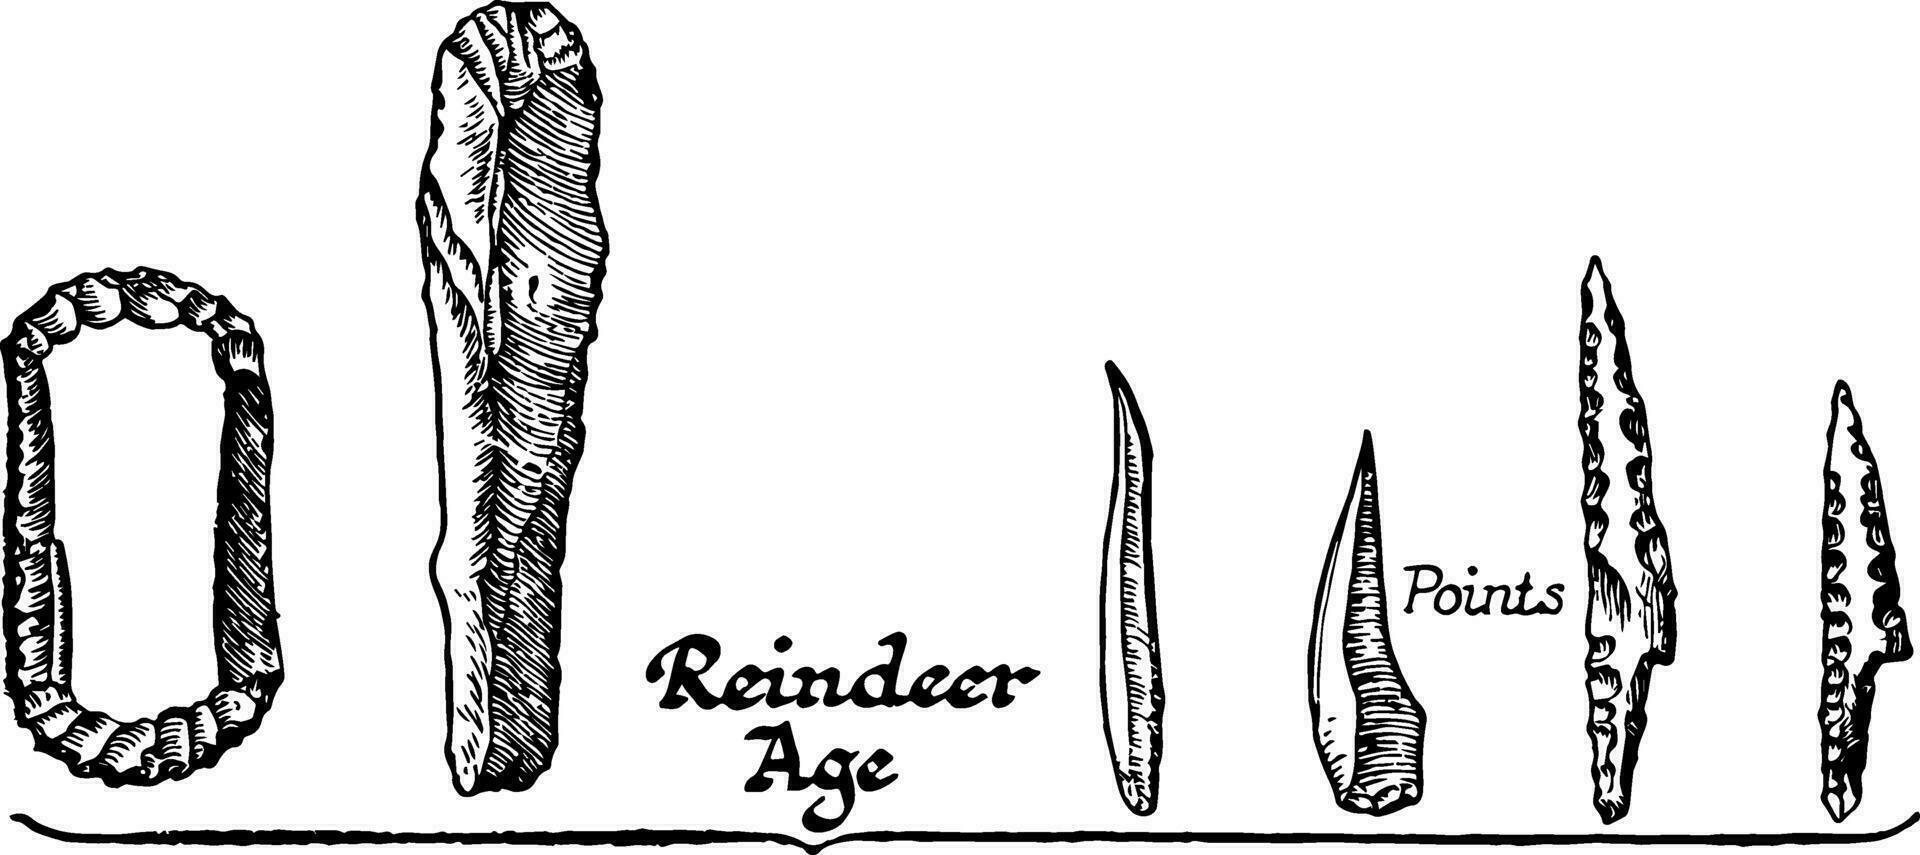 Reindeer Age Stone Implements vintage illustration. vector